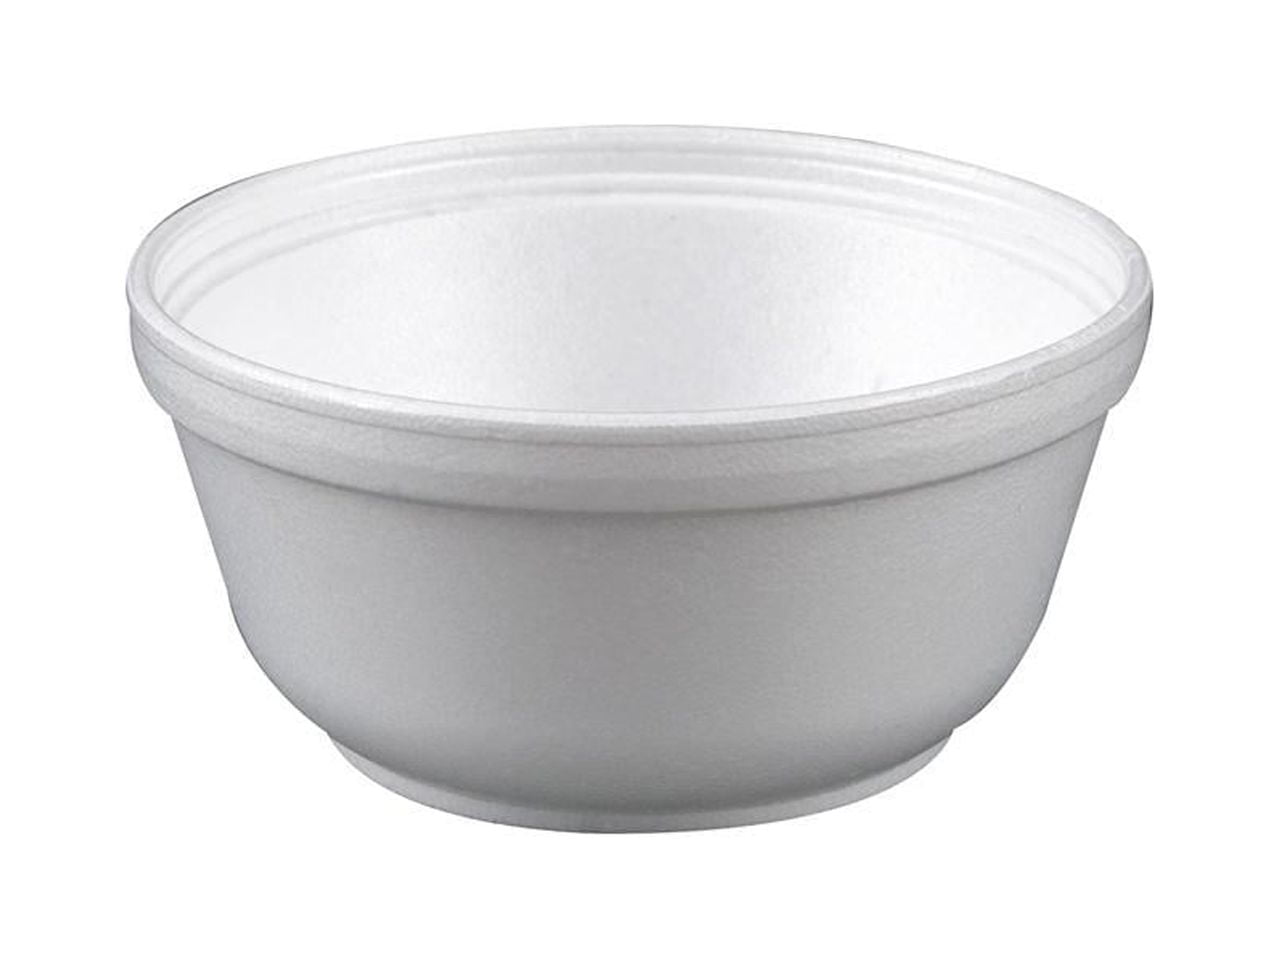 Product Categories Foam Bowls